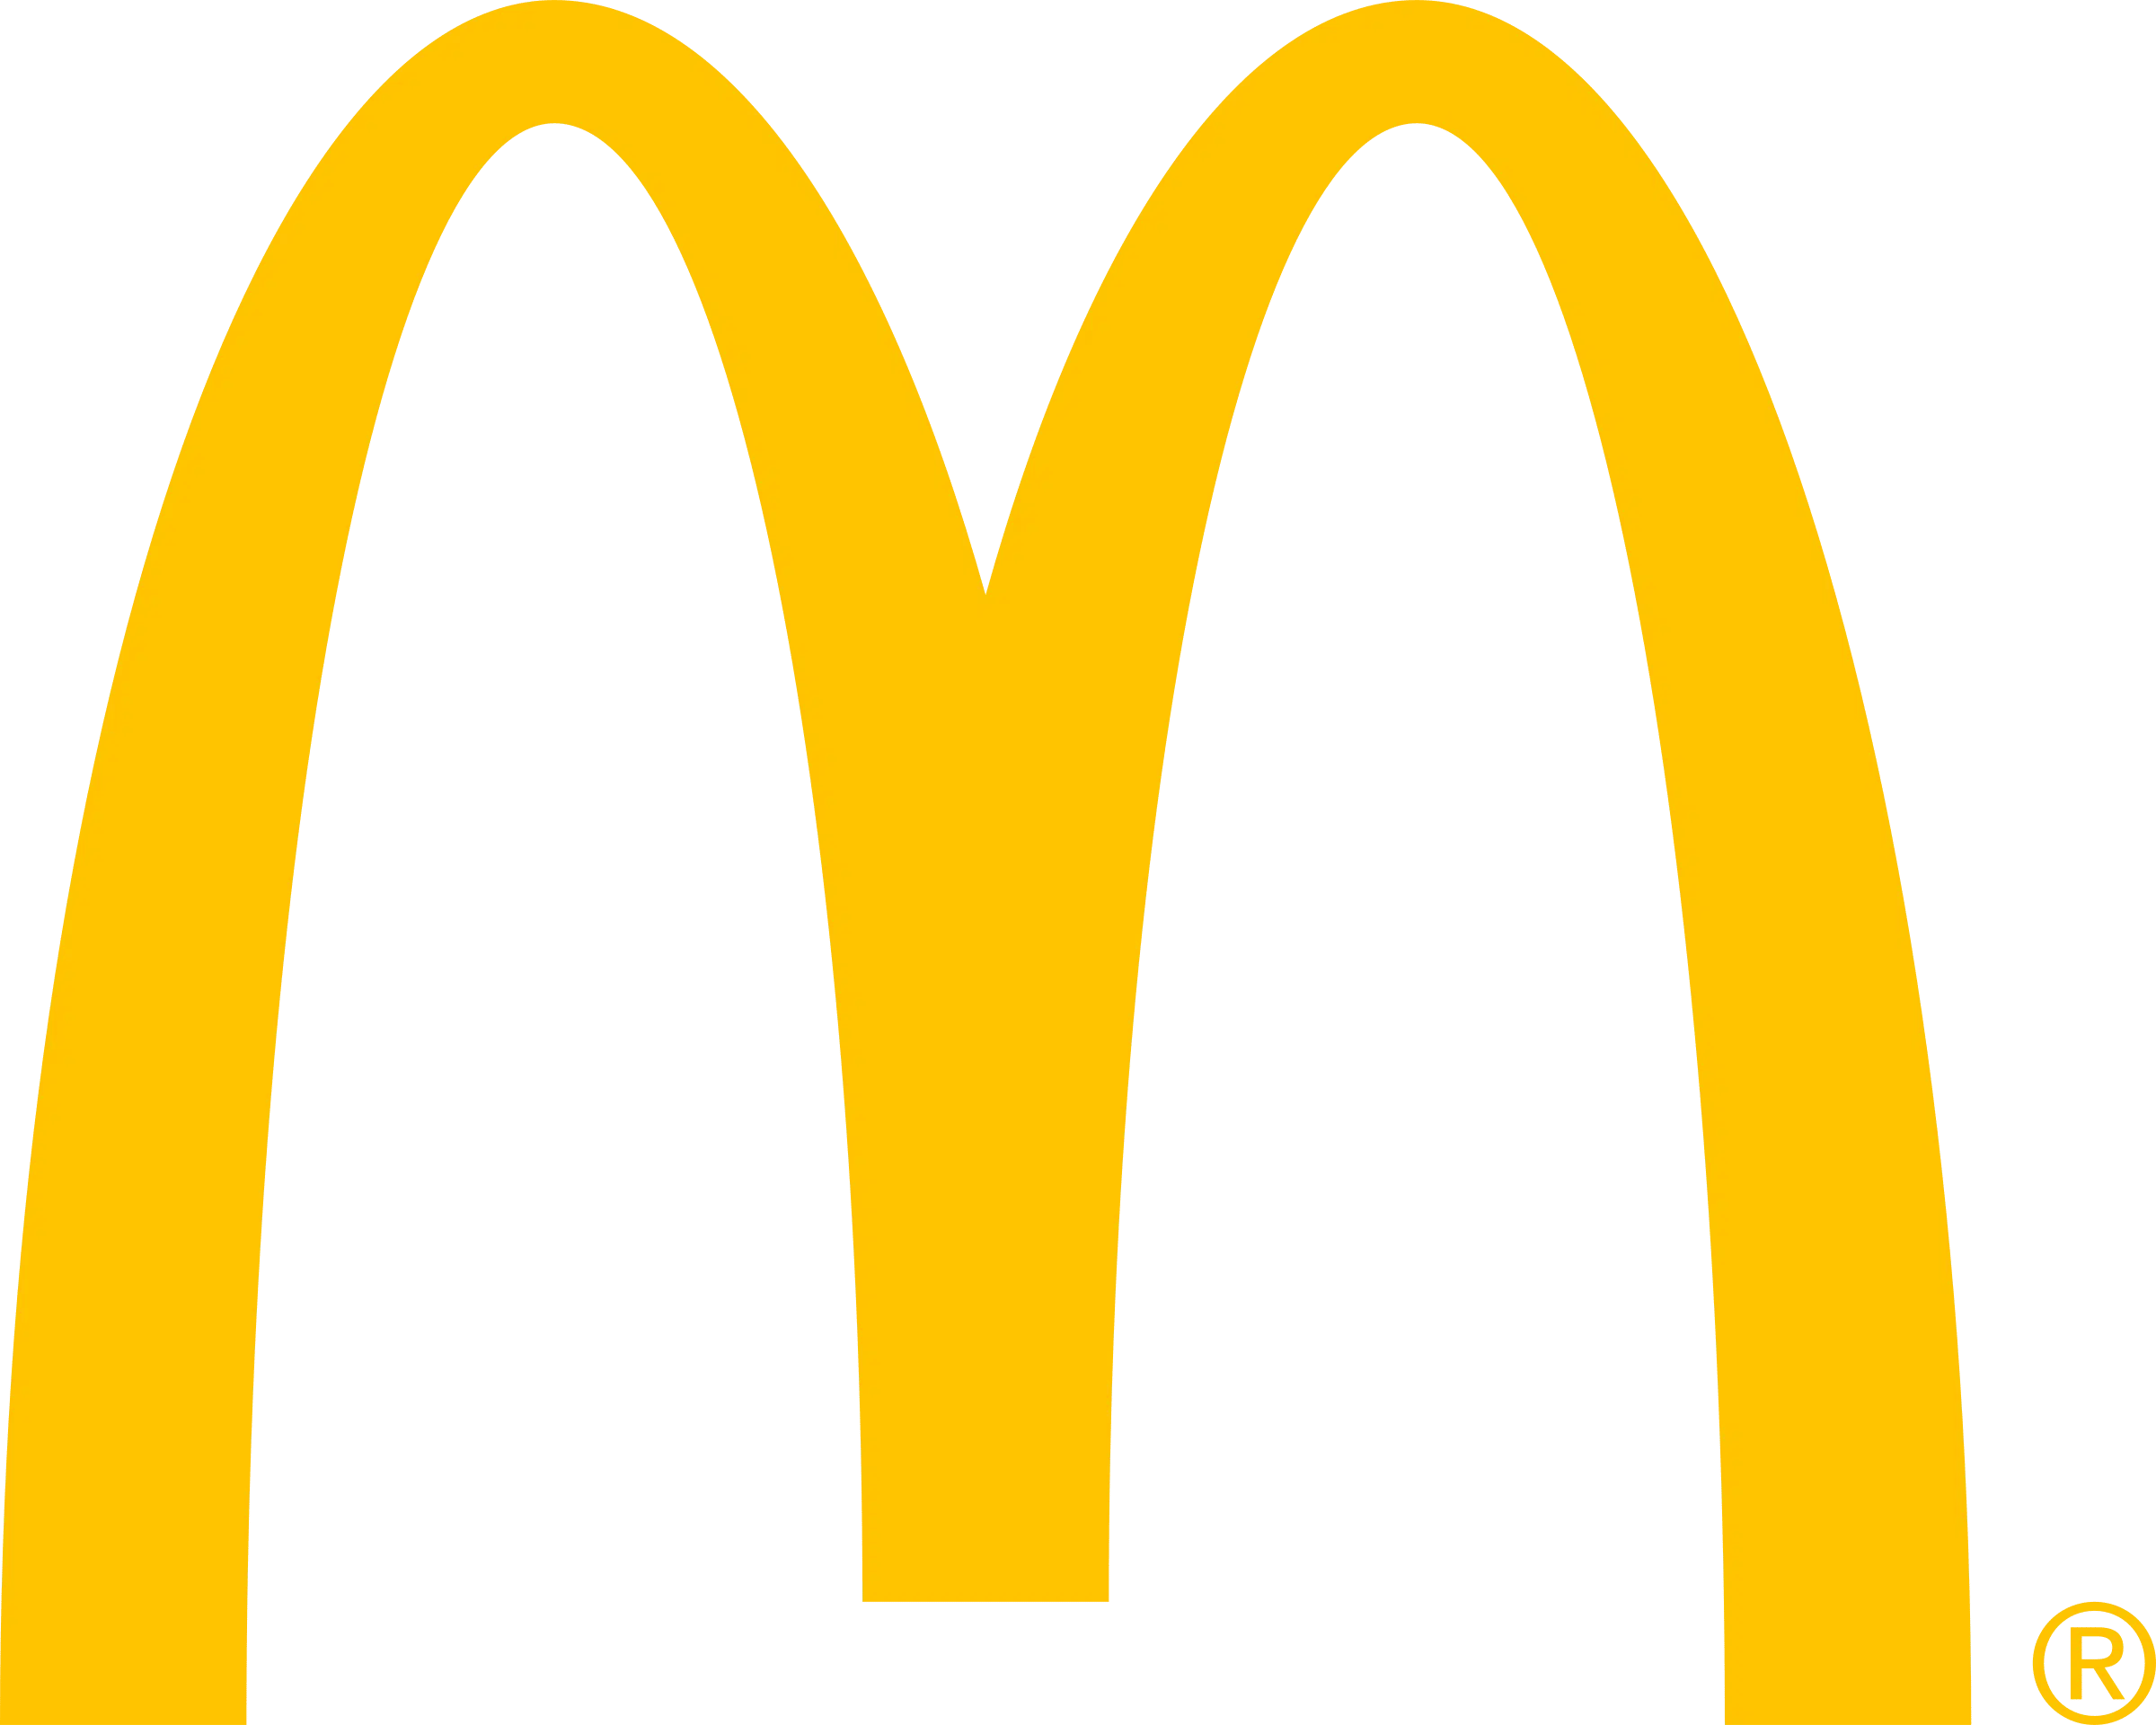 Macdonald's logo - Simplified Technology client